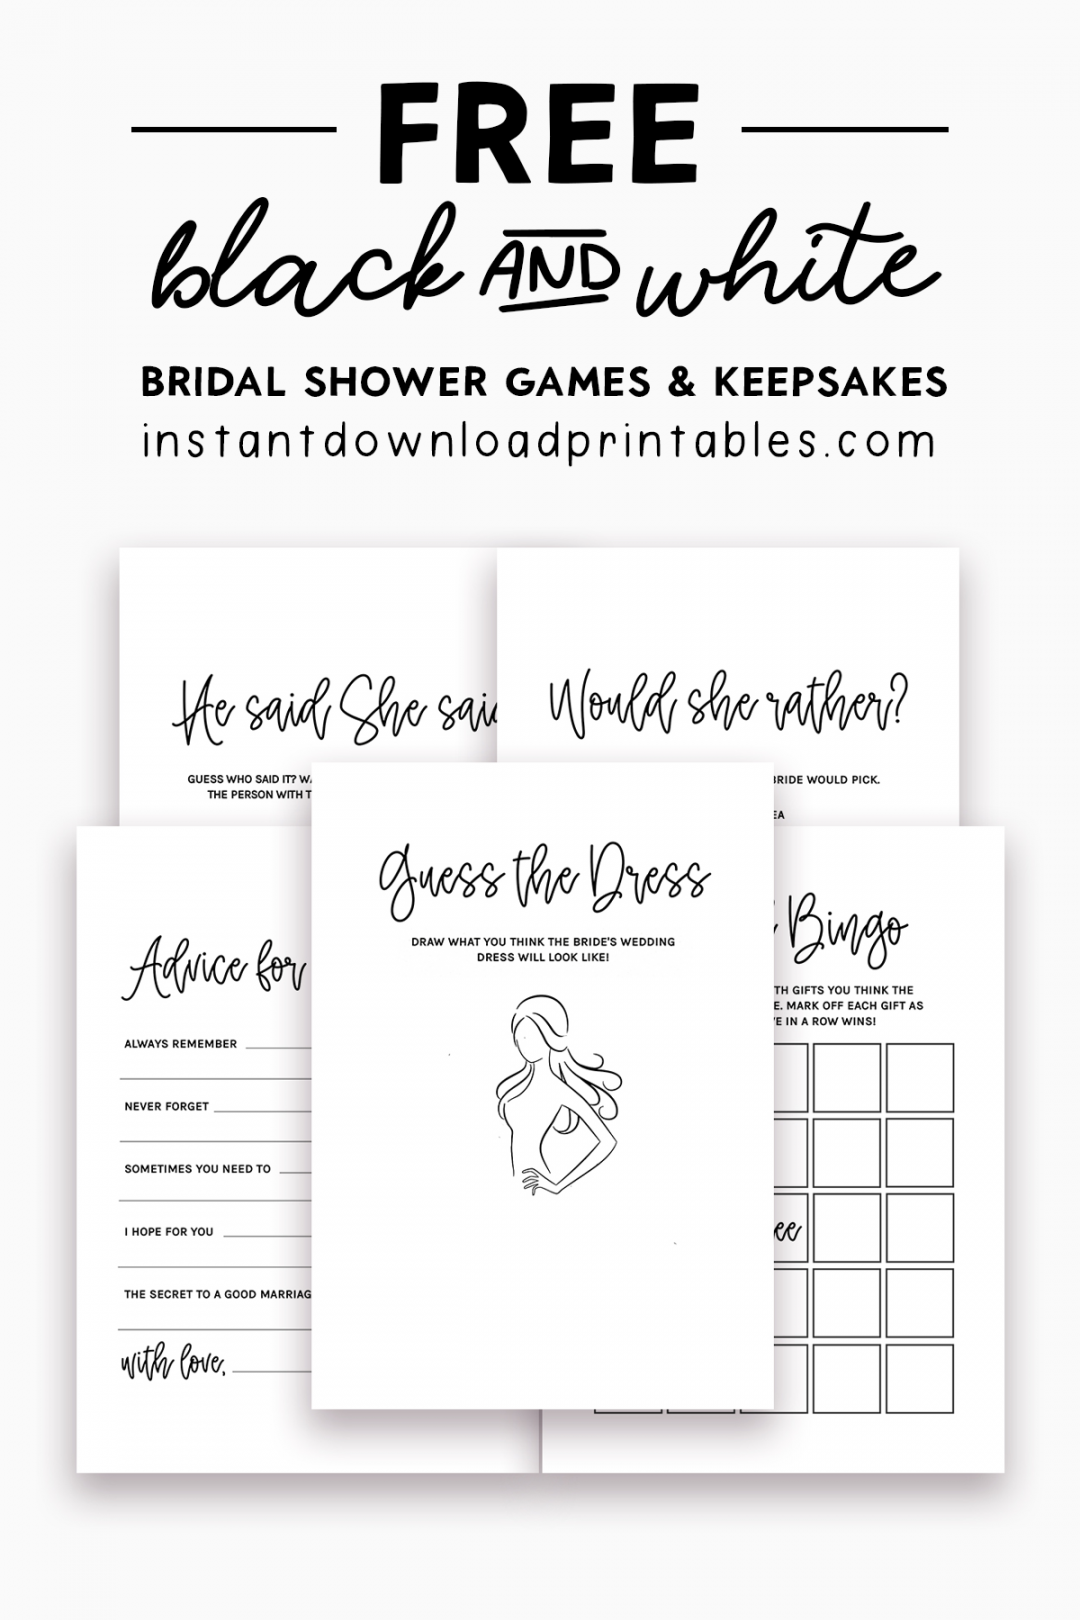 Free Printable Bridal Shower Games - Printable - Free Bridal Shower Games and Keepsakes Printables - Black and